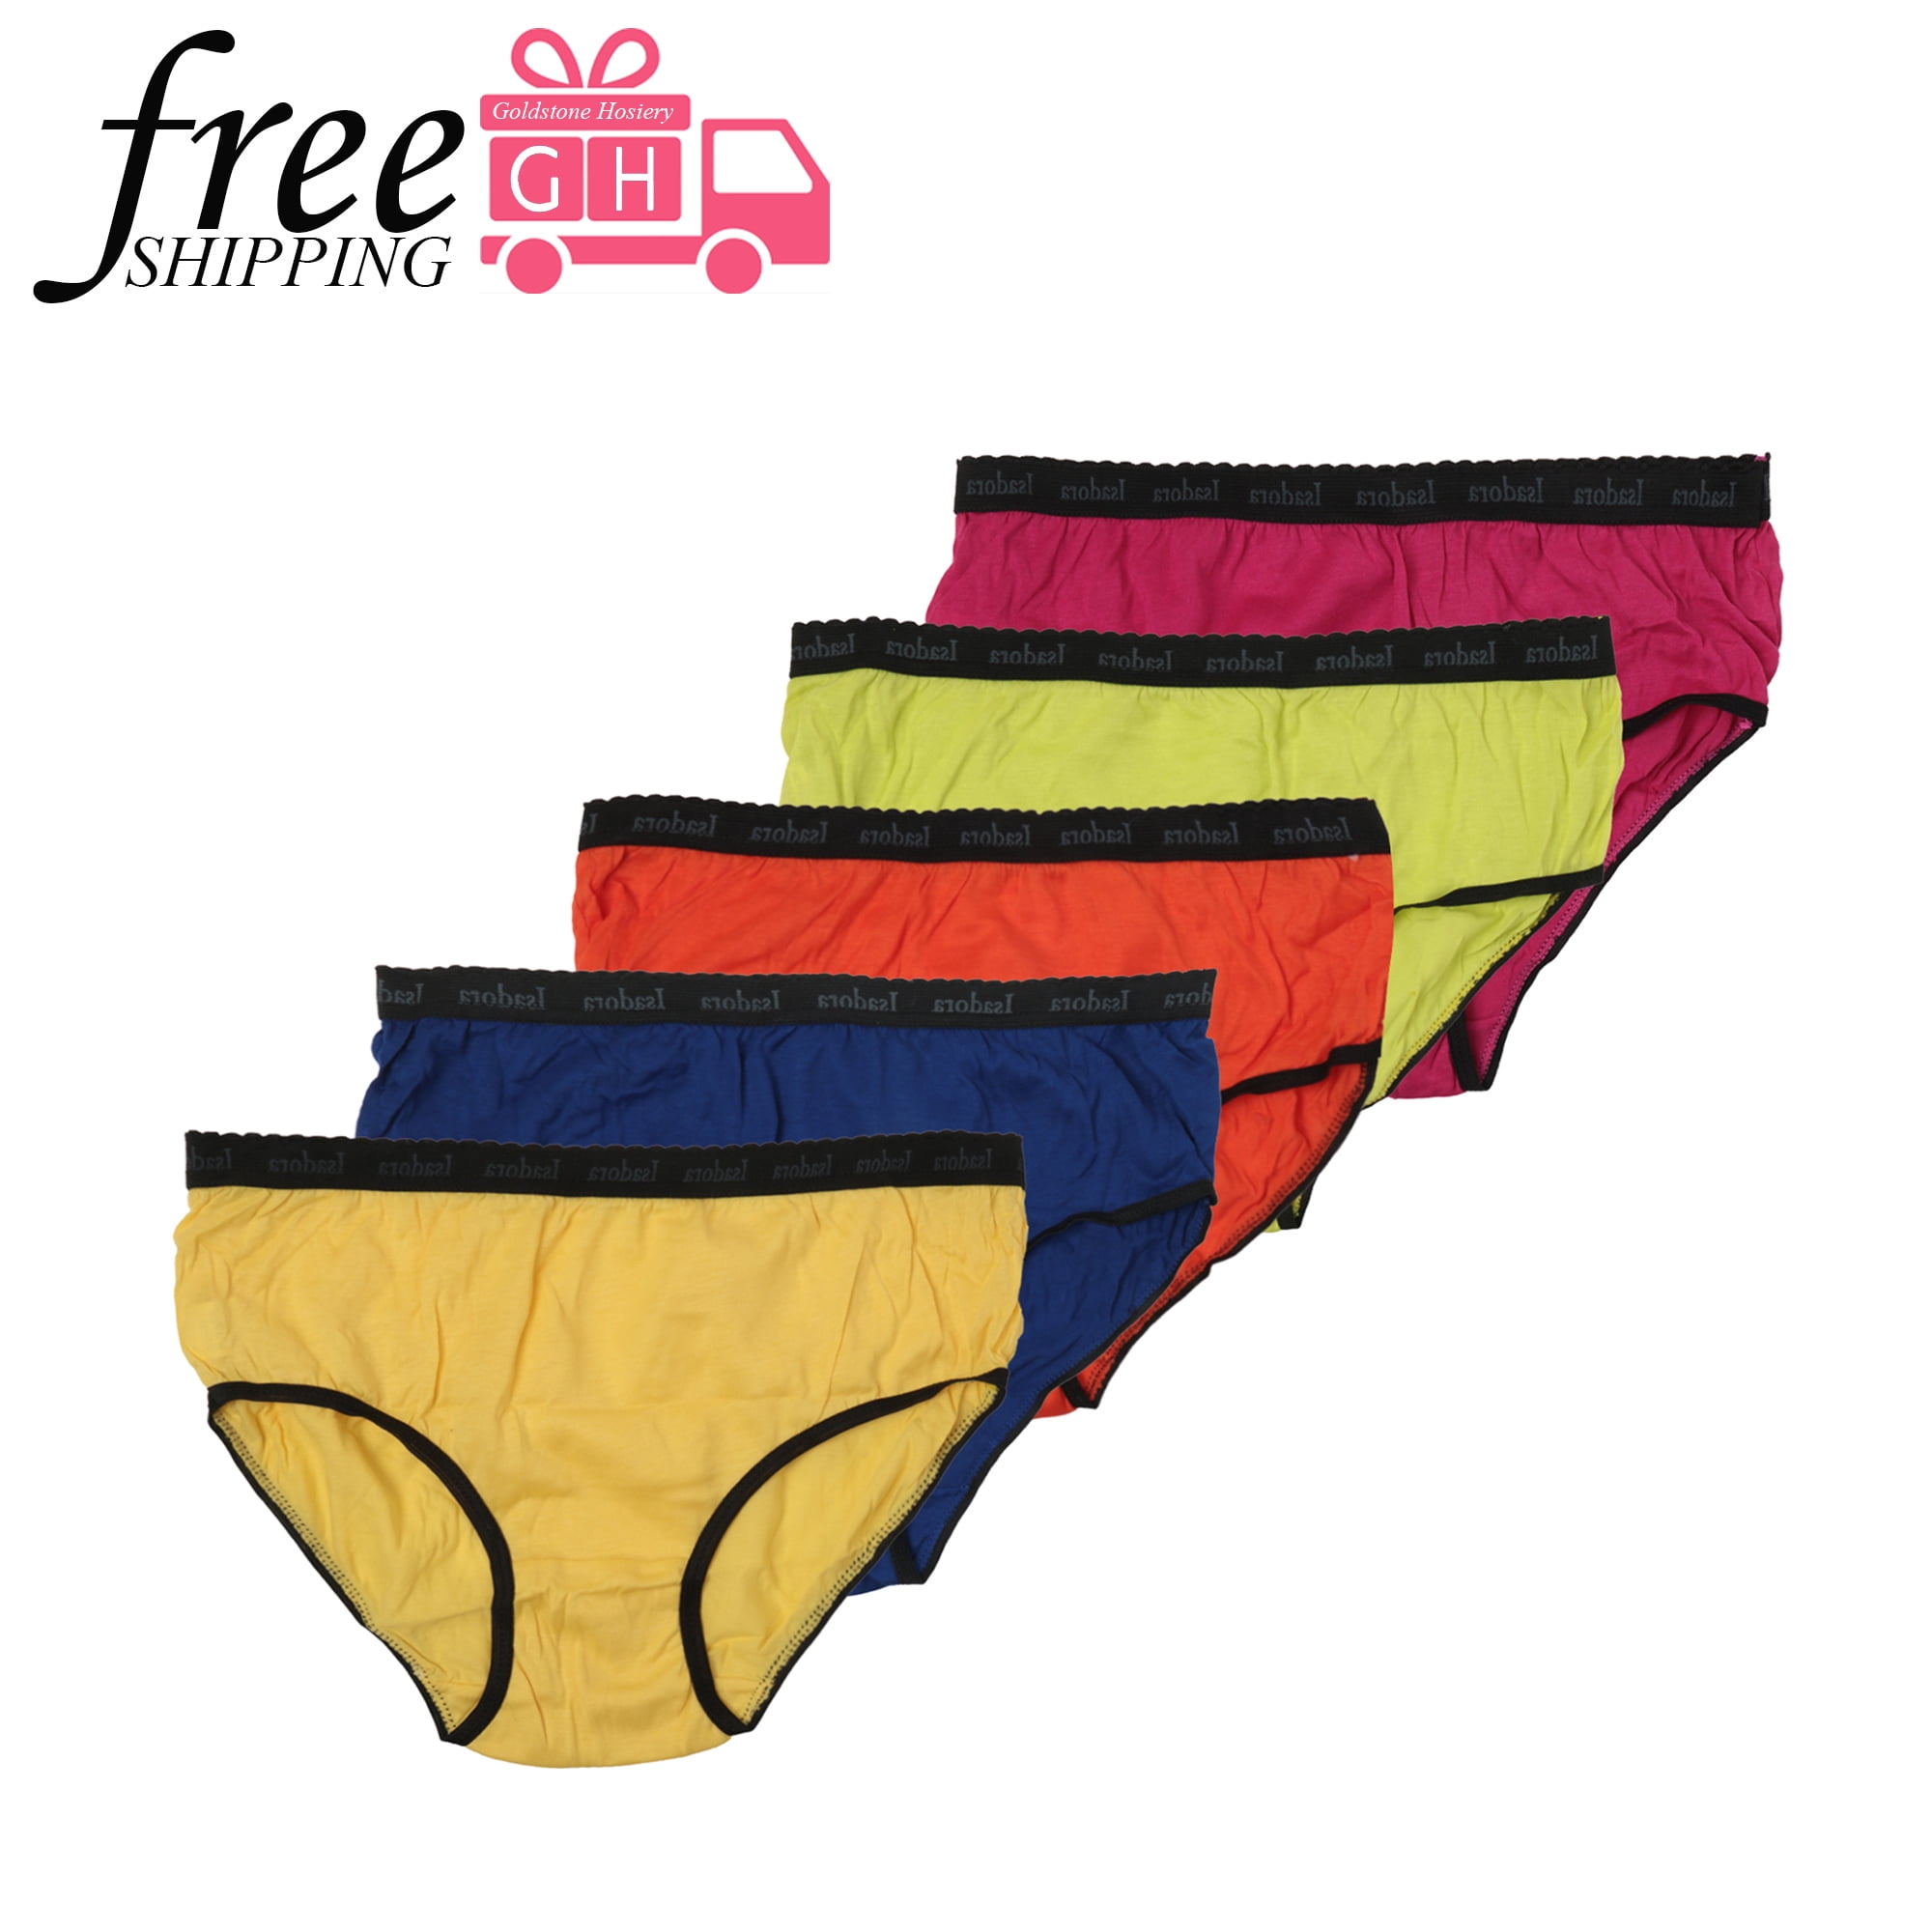 MINIDORA Women's Cotton Brief Breathable Stretch Panties Underwear Lingerie 5-Pack 